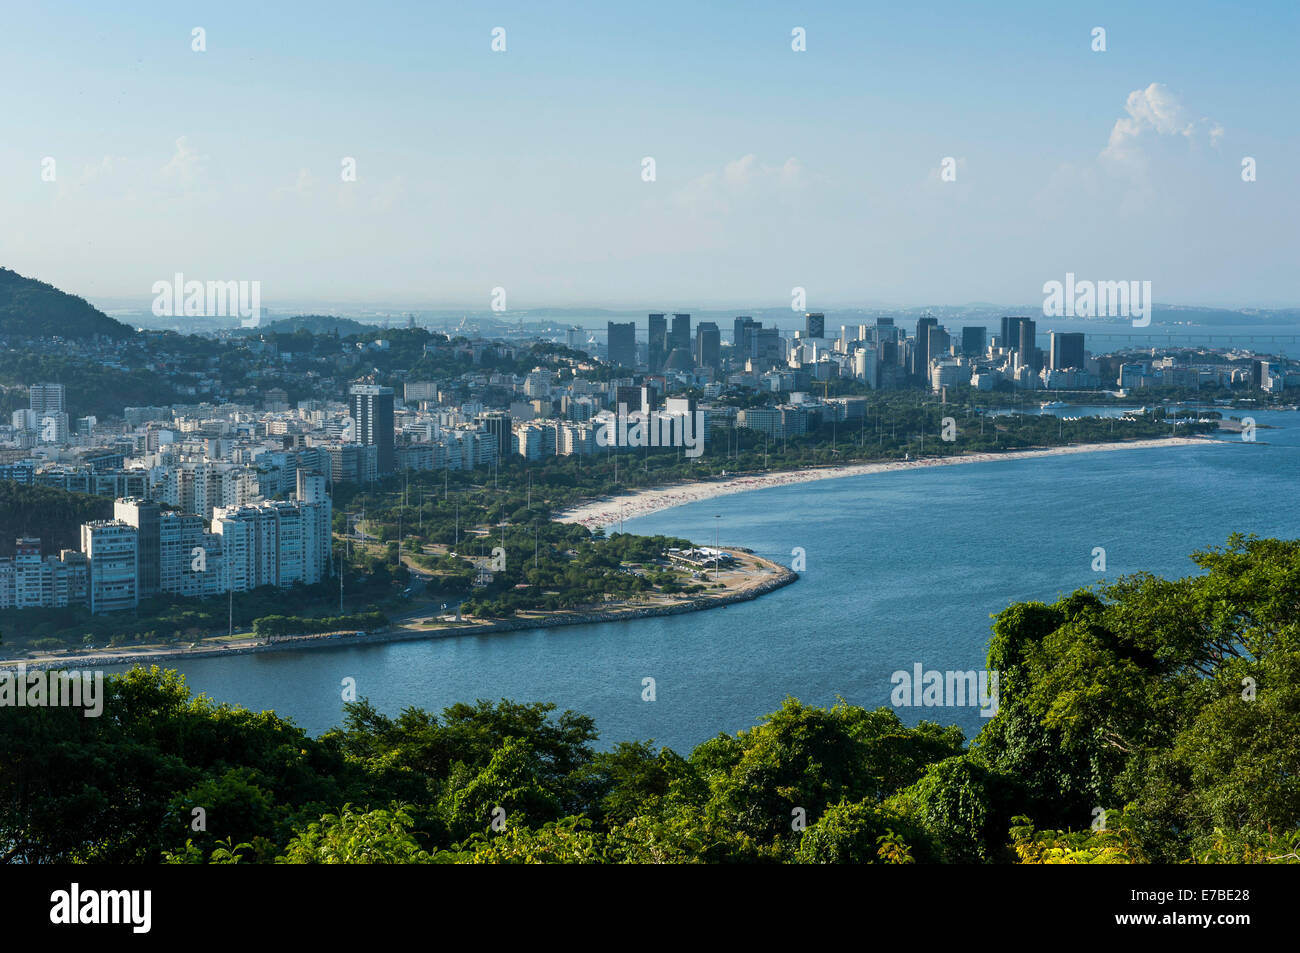 View from the Sugar Loaf, Rio de Janeiro, Brazil Stock Photo